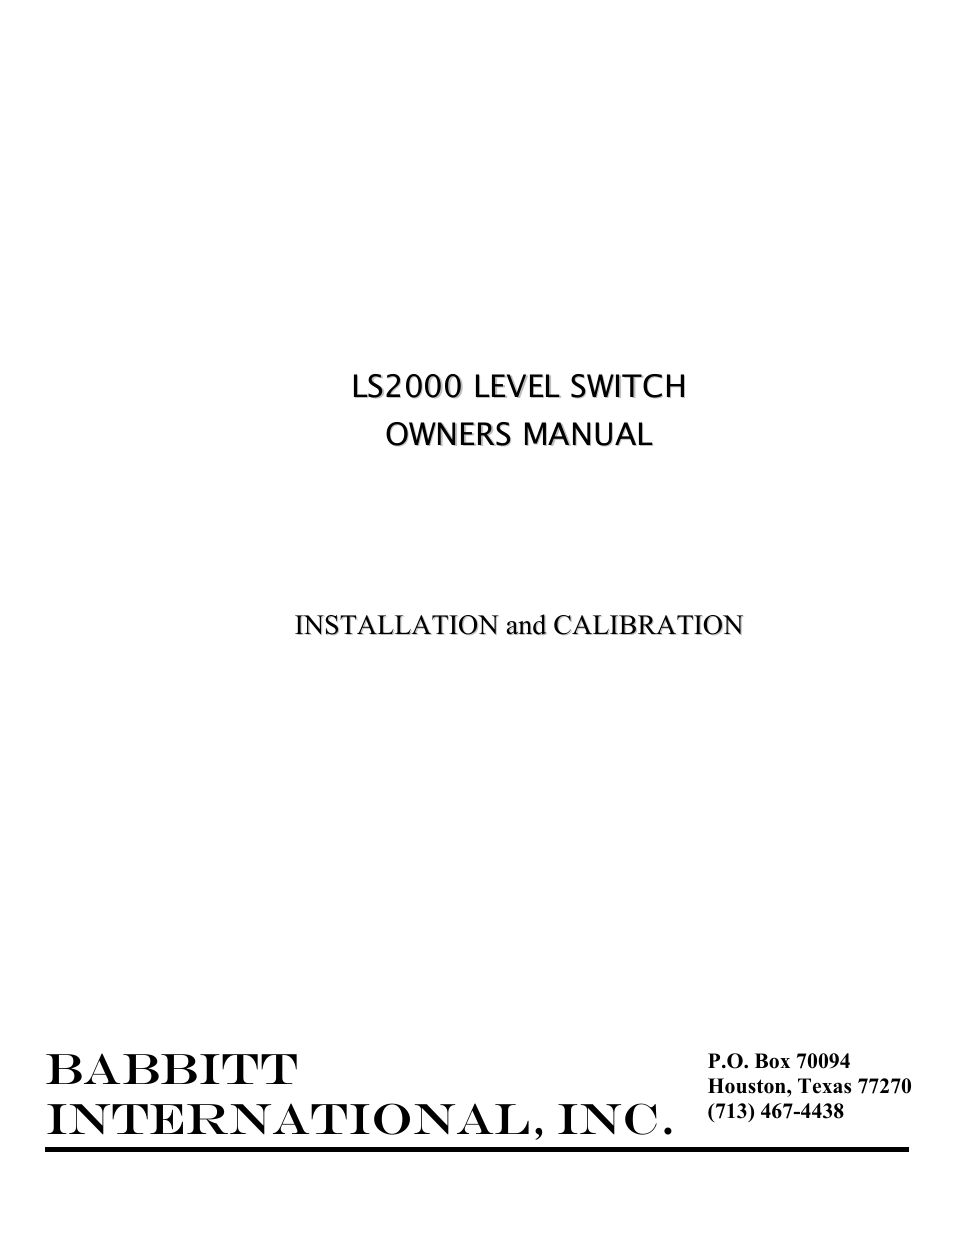 LS-2000 Level Switch